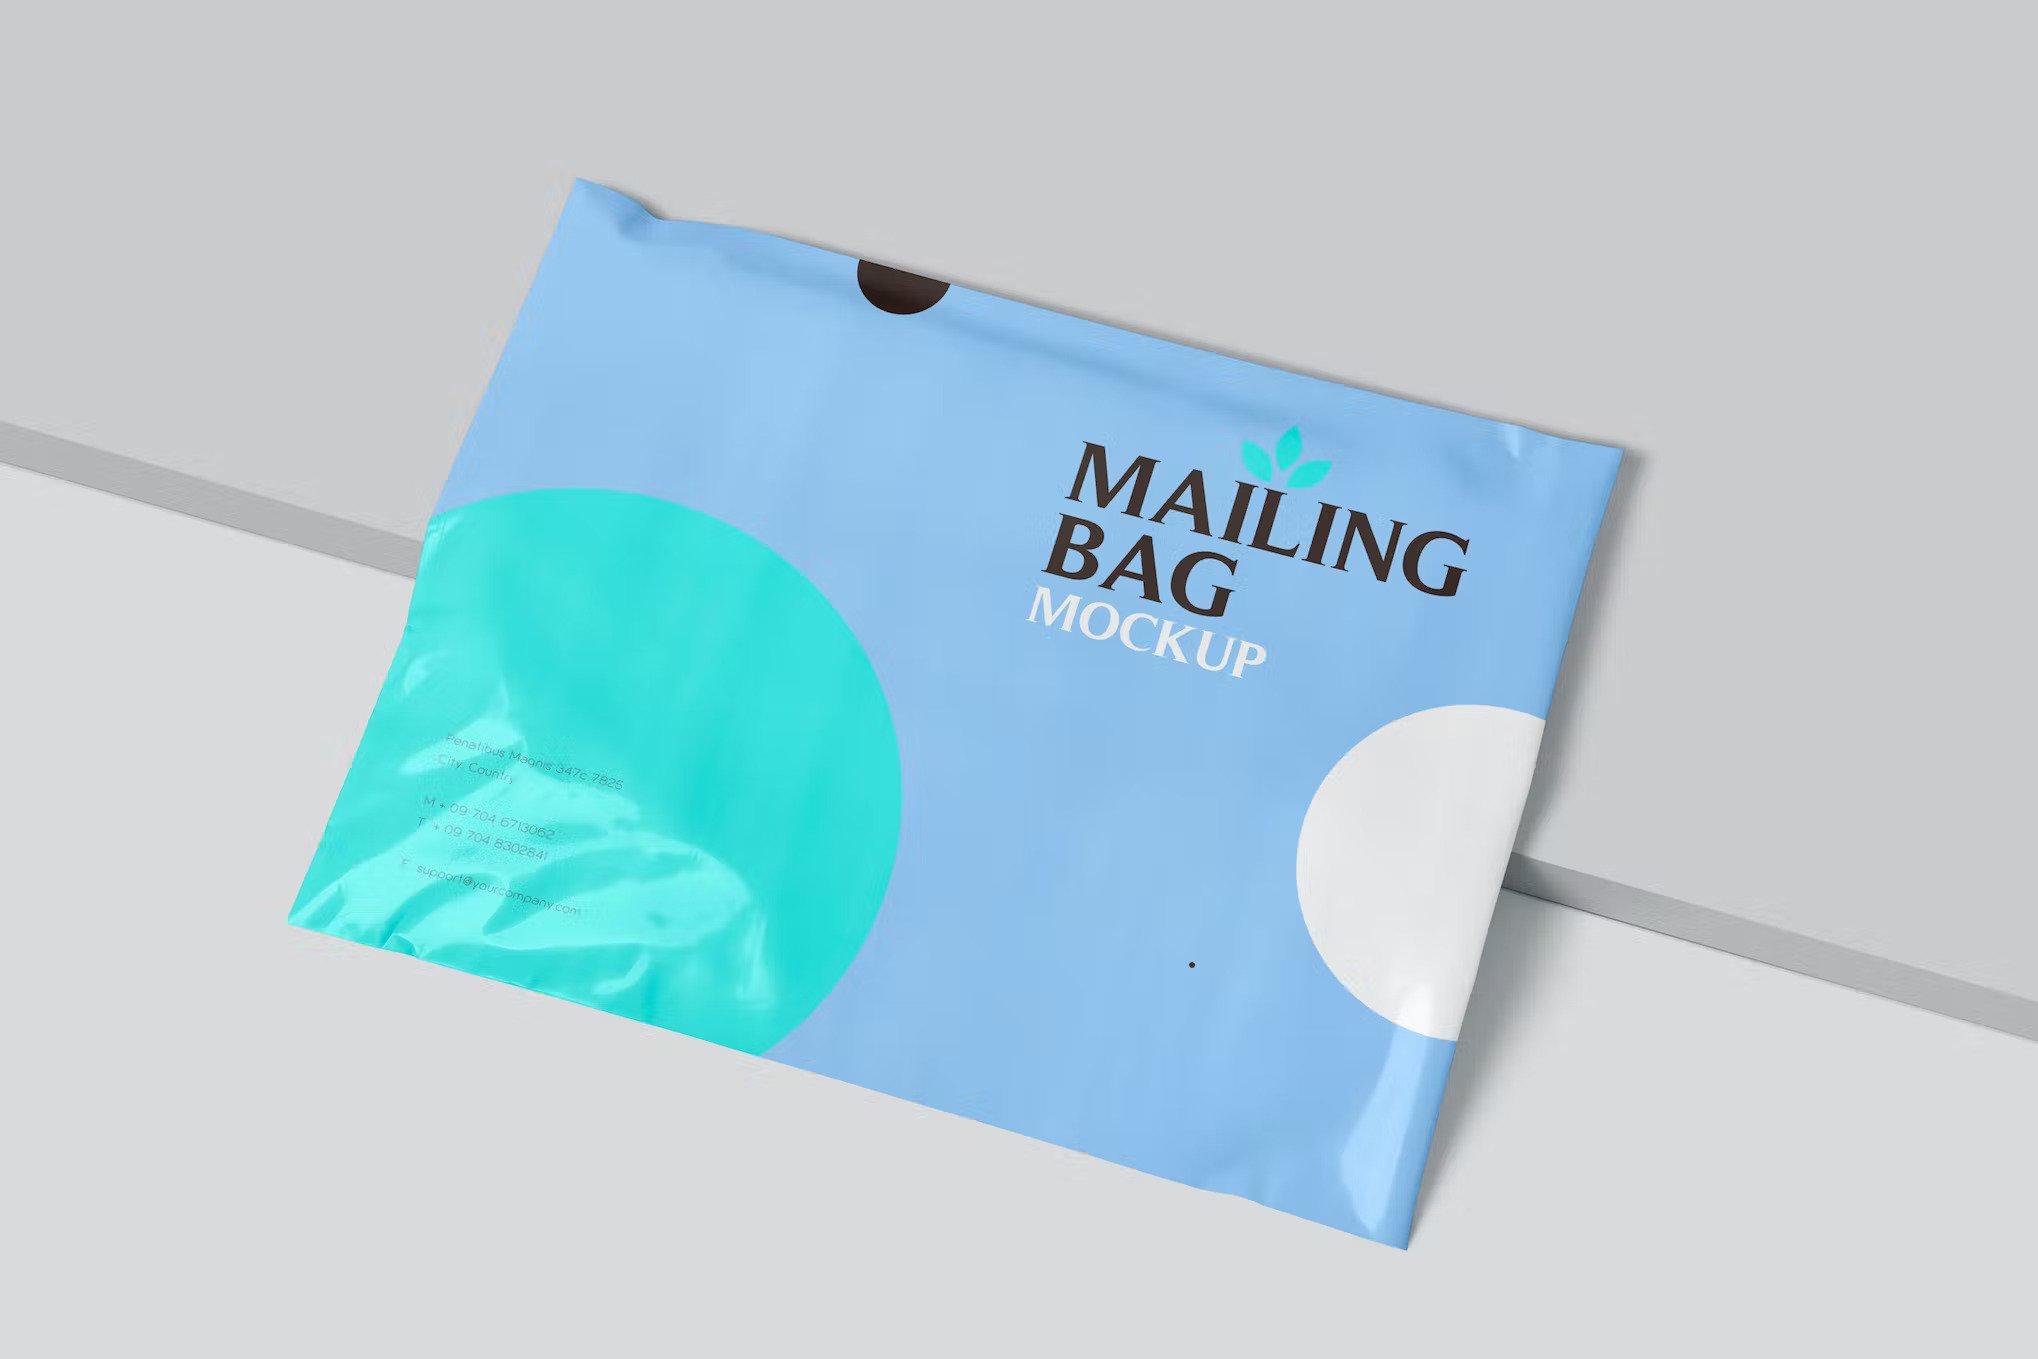 A mailing bag mockup set